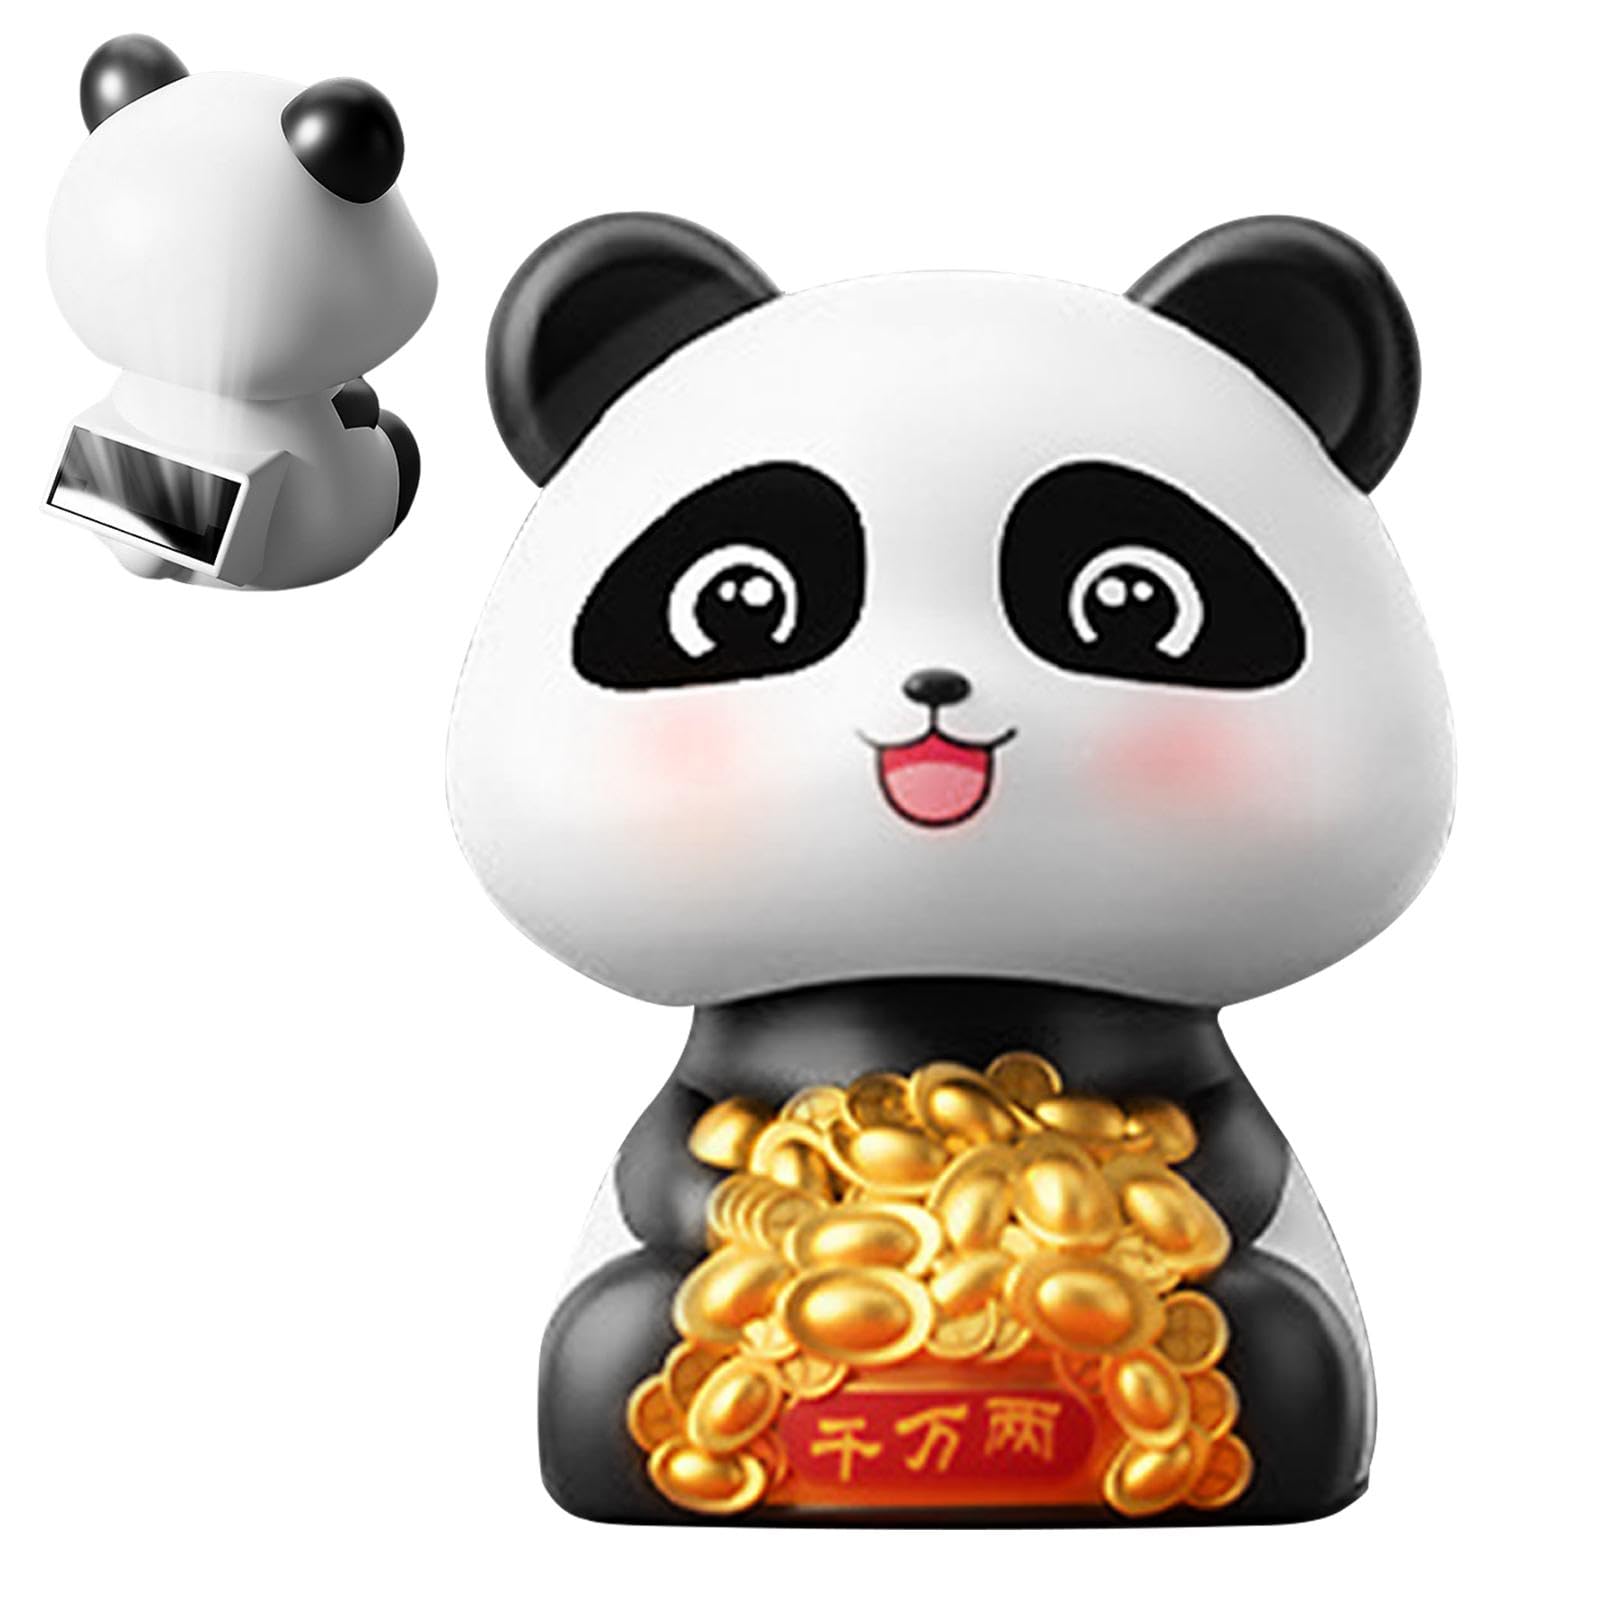 Panda-Armaturenbrett-Dekorationen – dekorative Autoanhänger, Tierstatuen | Panda-Armaturenbrett-Figuren, schöne Panda-Auto-Armaturenbrett-Dekoration, solarbetriebener schüttelnder Kopf-Panda für den S von Nixieen